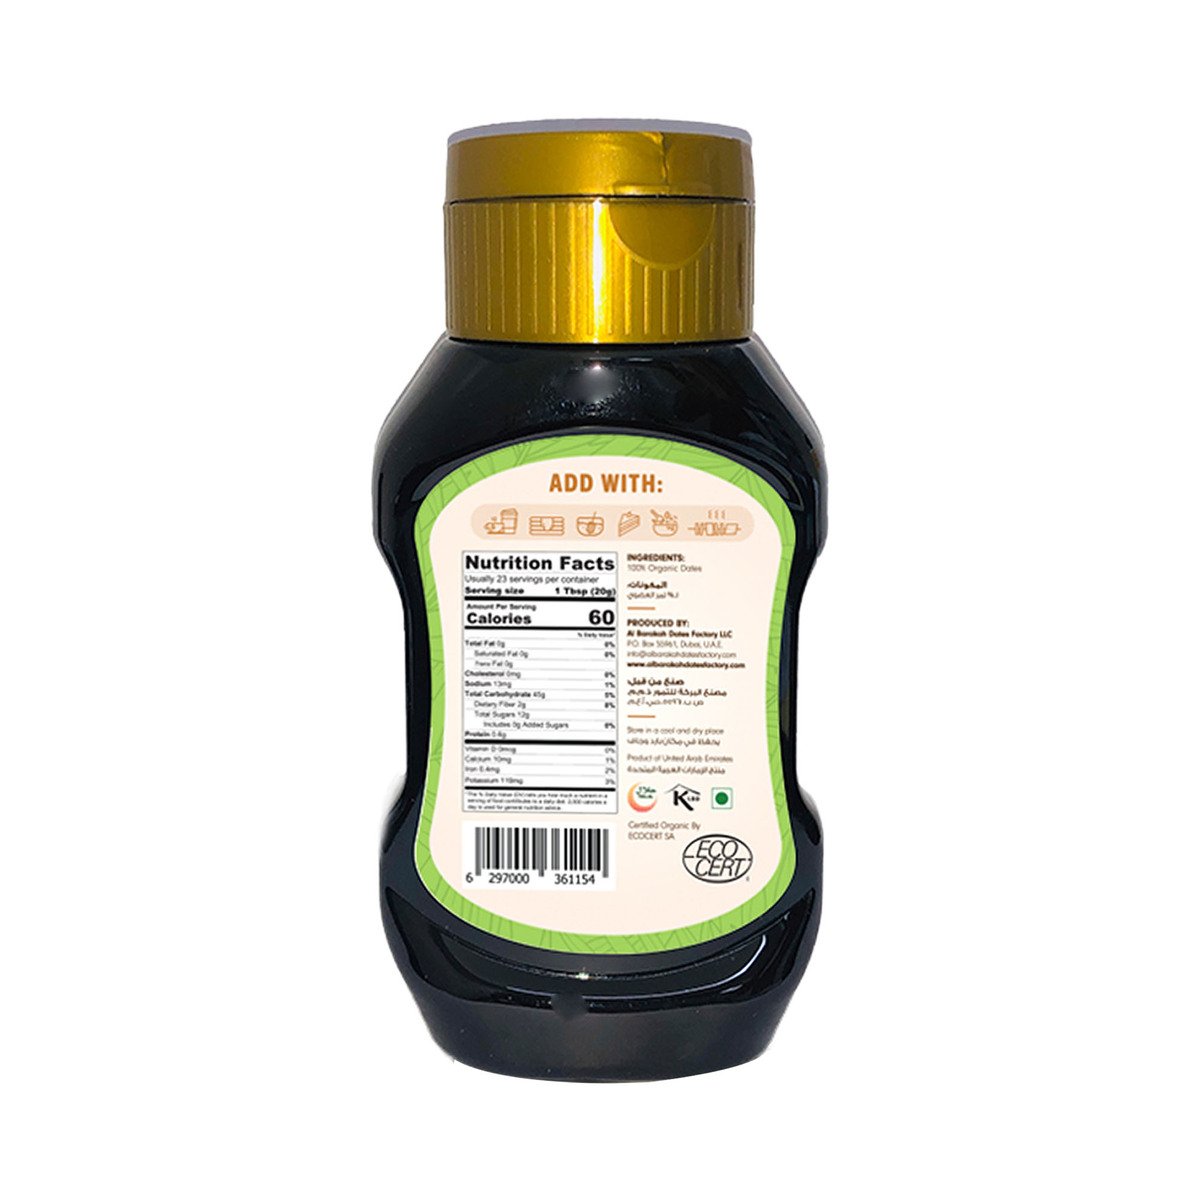 Al Barakah Organic Date Syrup 470 ml